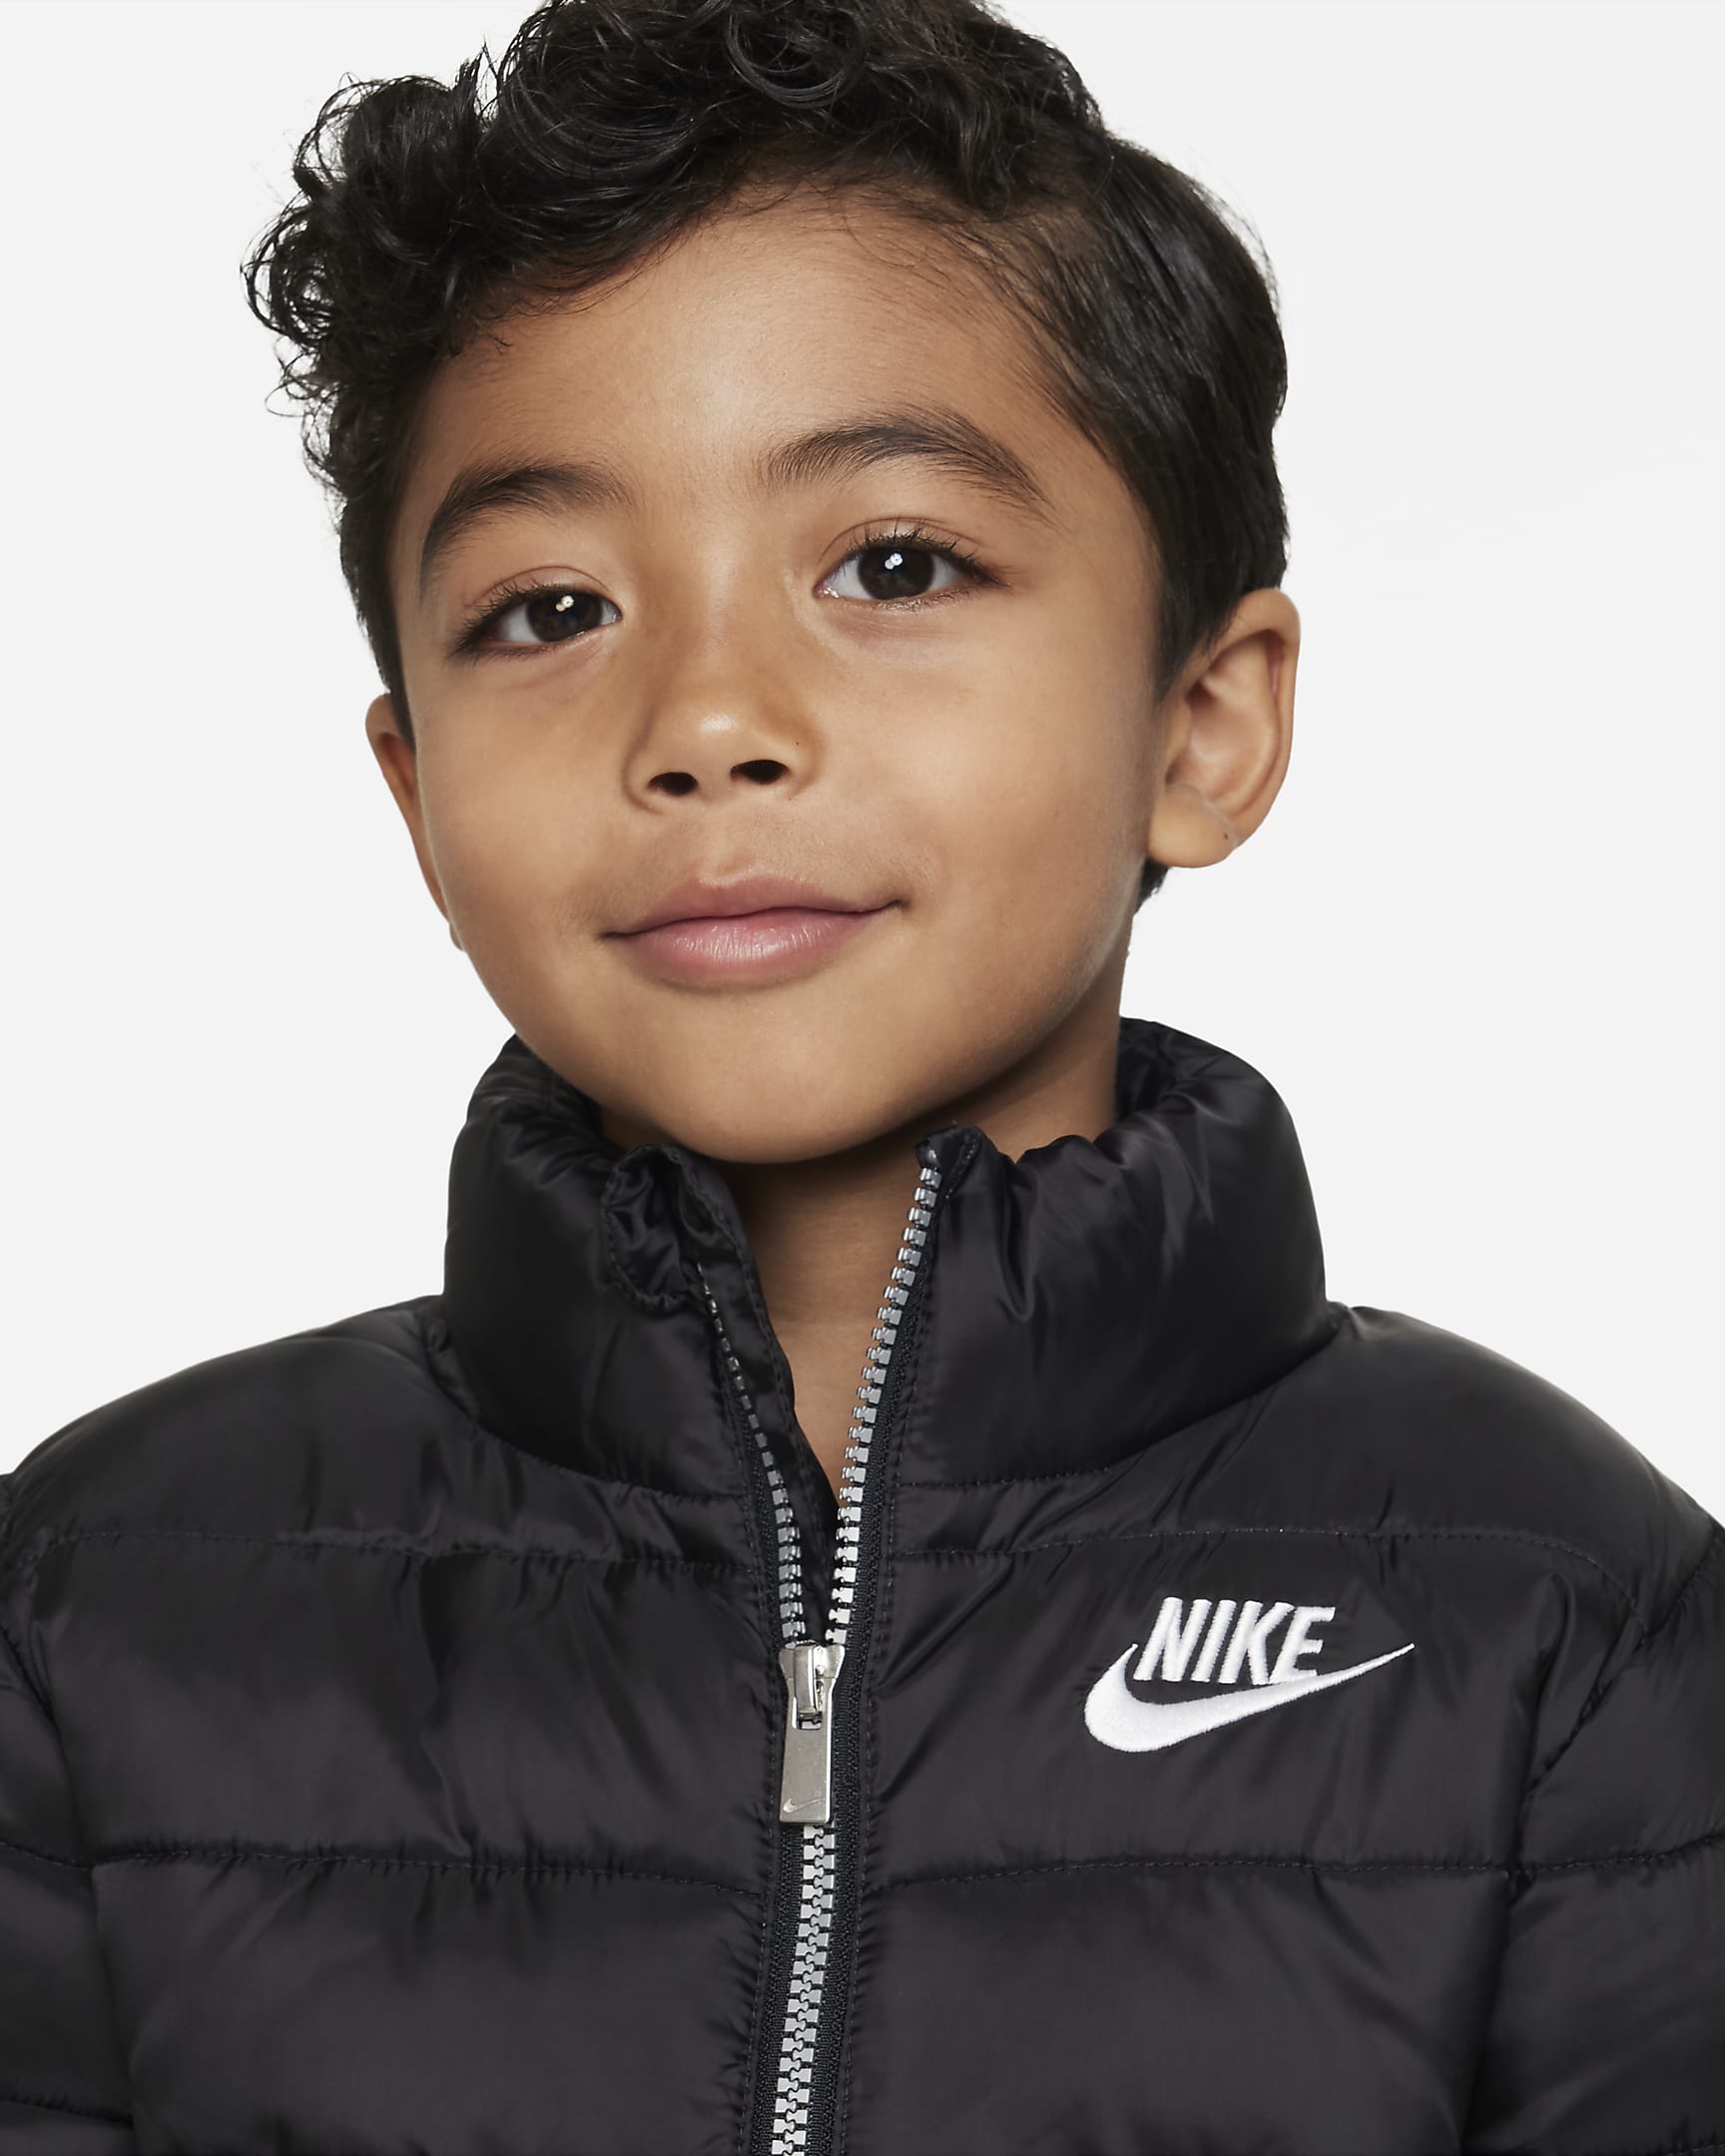 Nike Solid Puffer Jacket Little Kids' Jacket. Nike.com